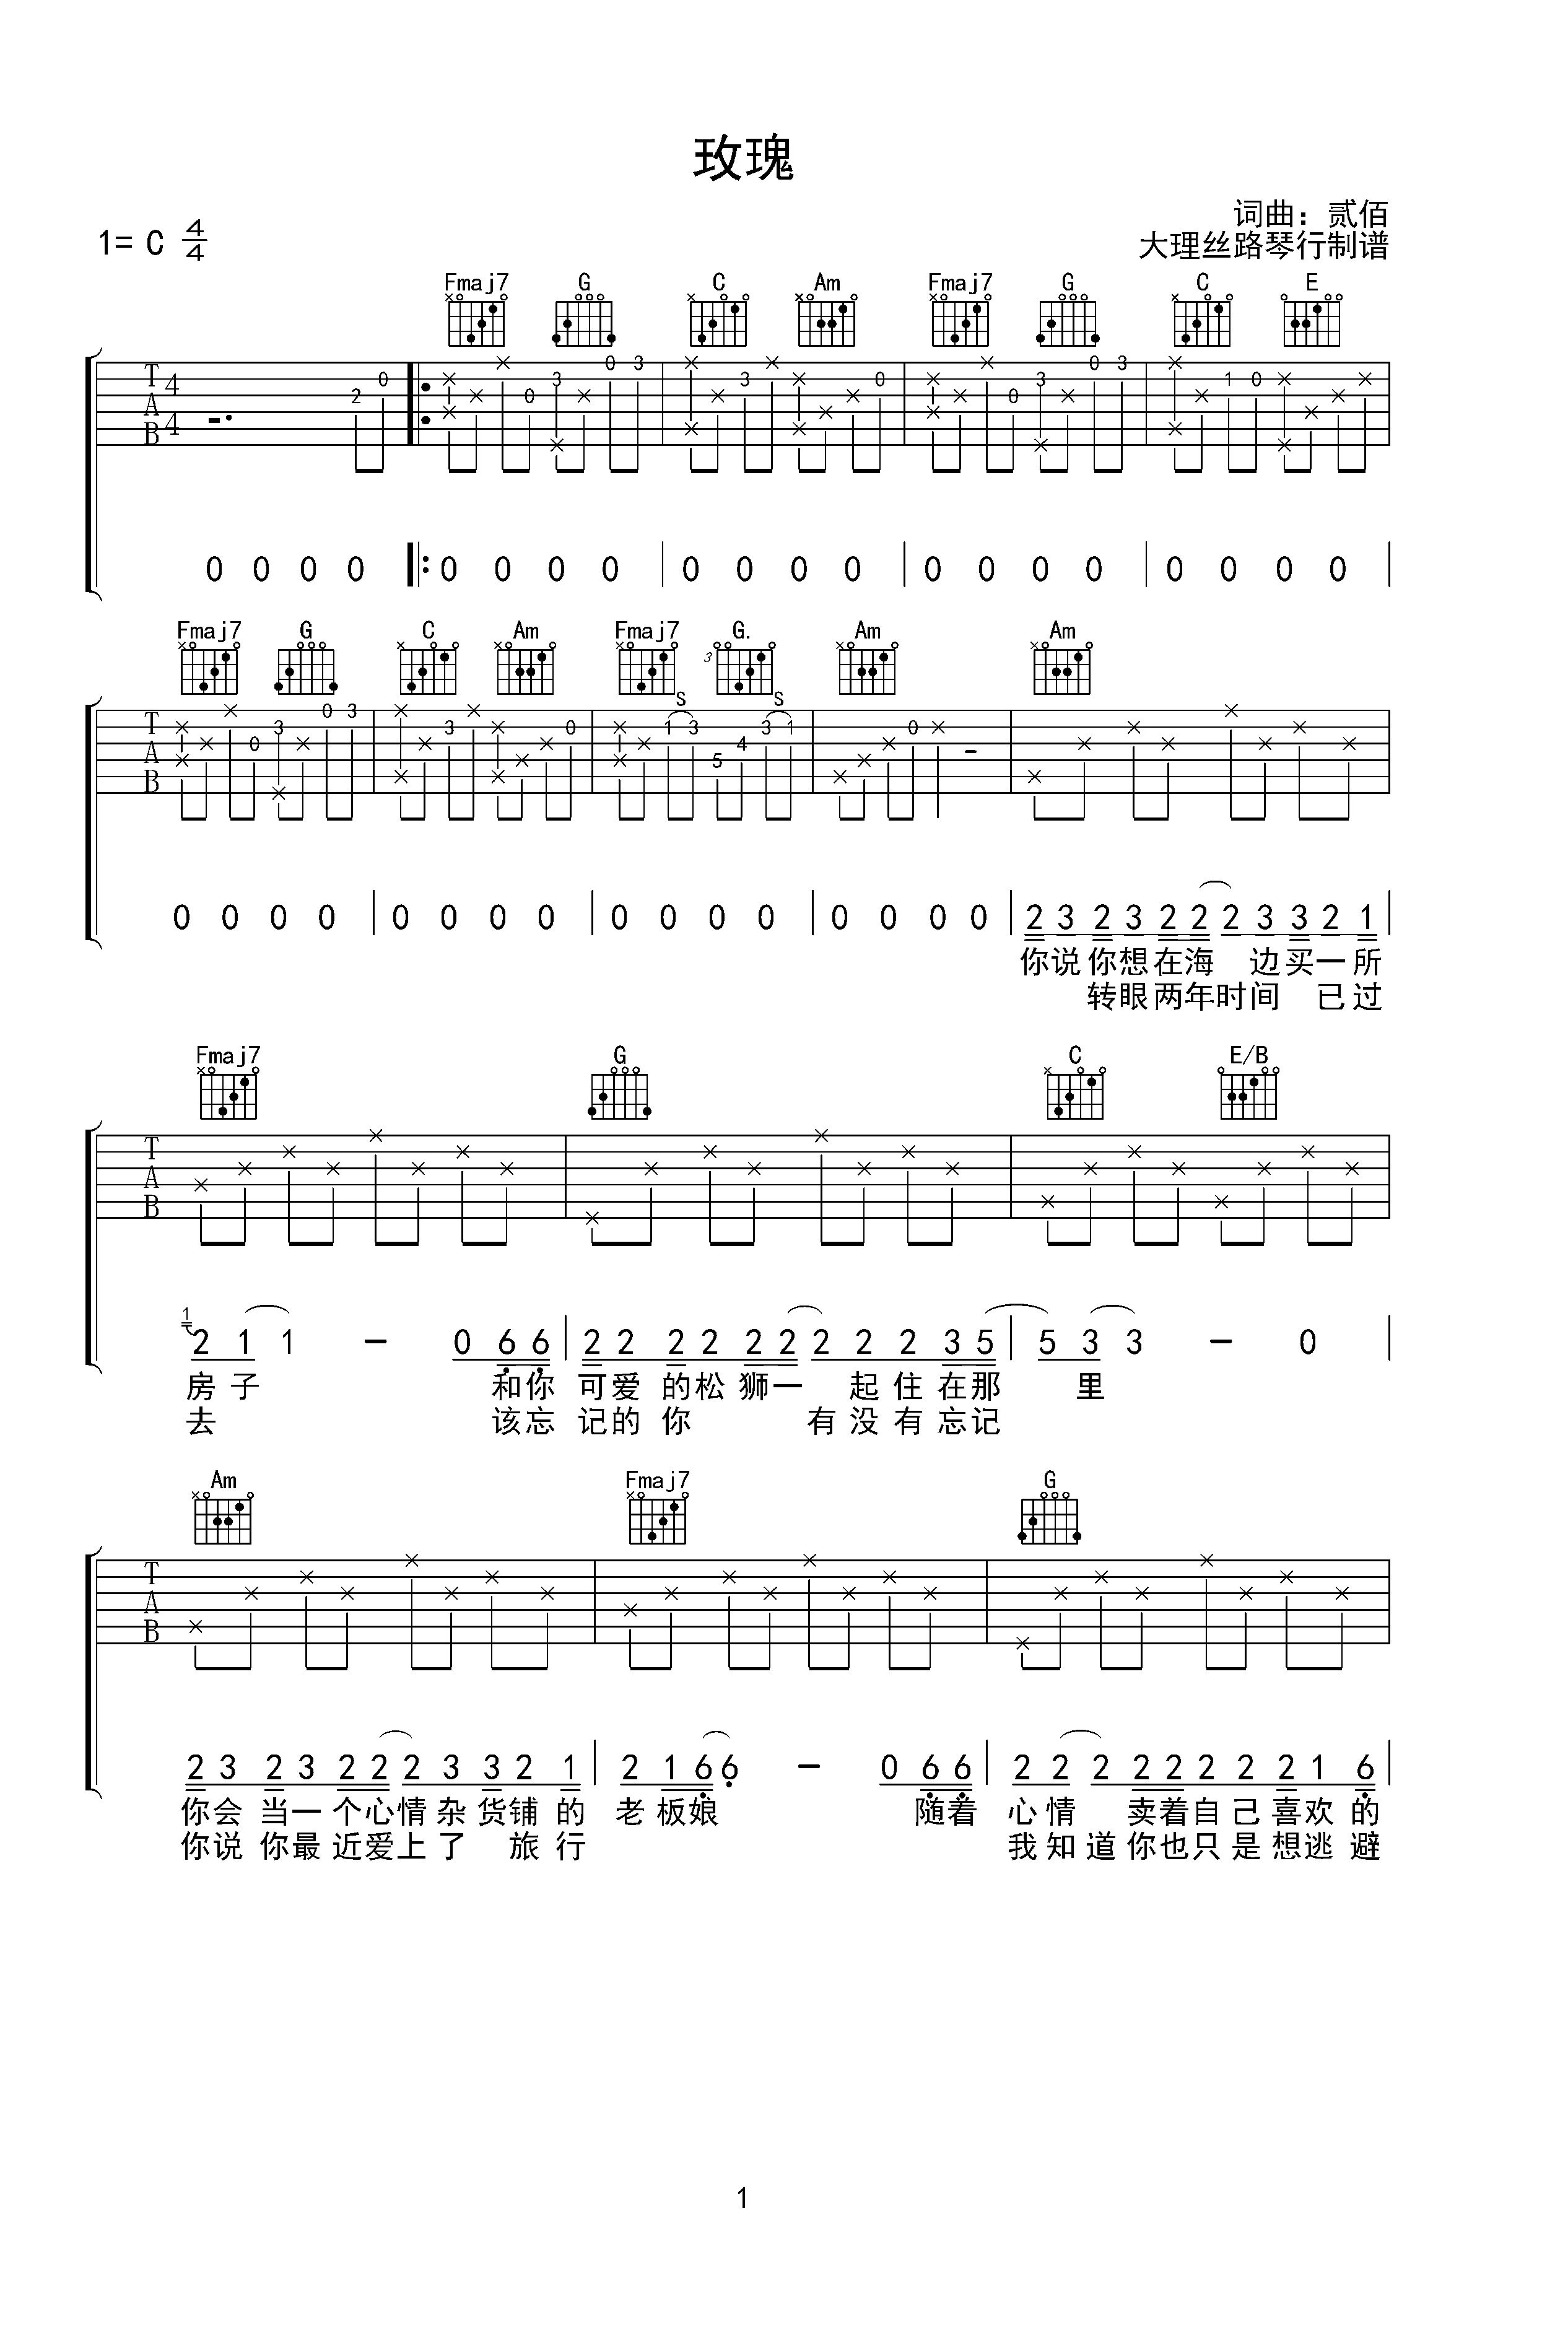 mopemope吉他谱,pigros吉他,后来吉他(第15页)_大山谷图库